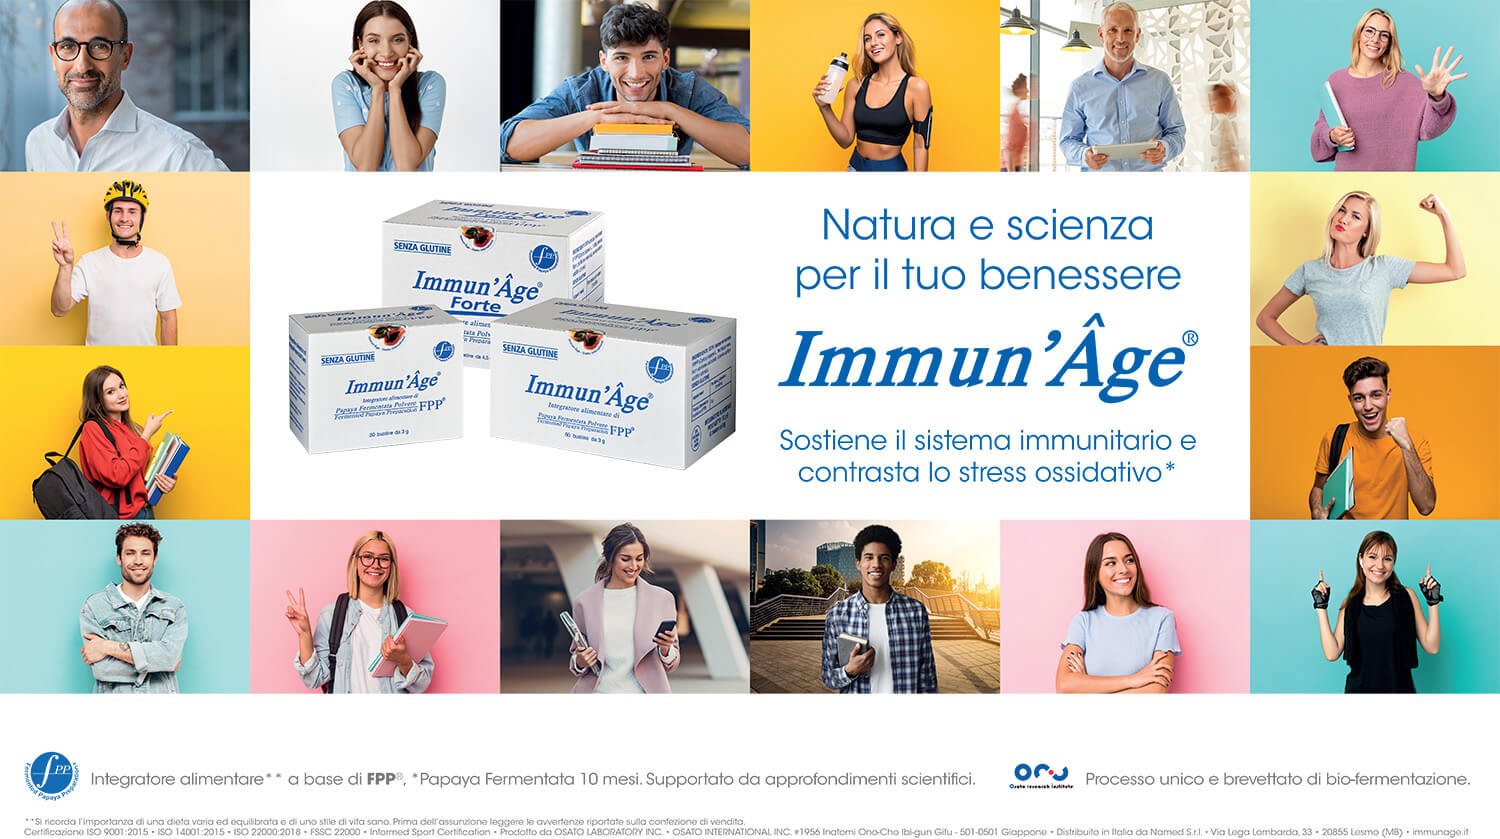 Immun’Âge